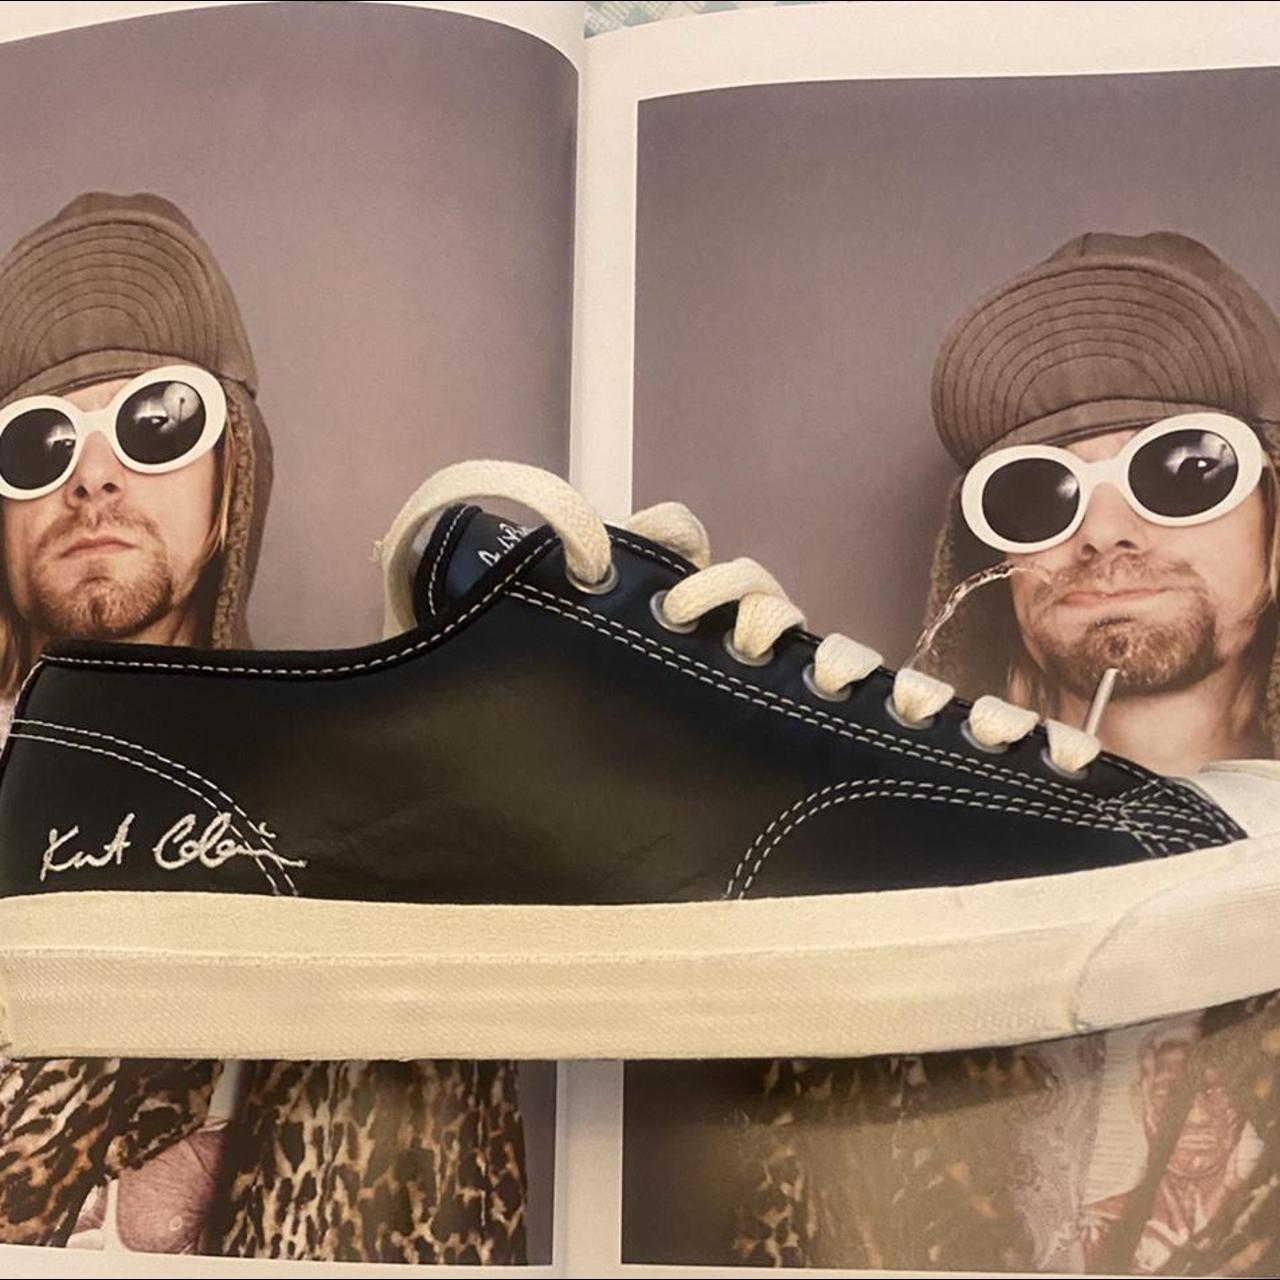 Kurt Cobain Edition Converse. Converse Depop